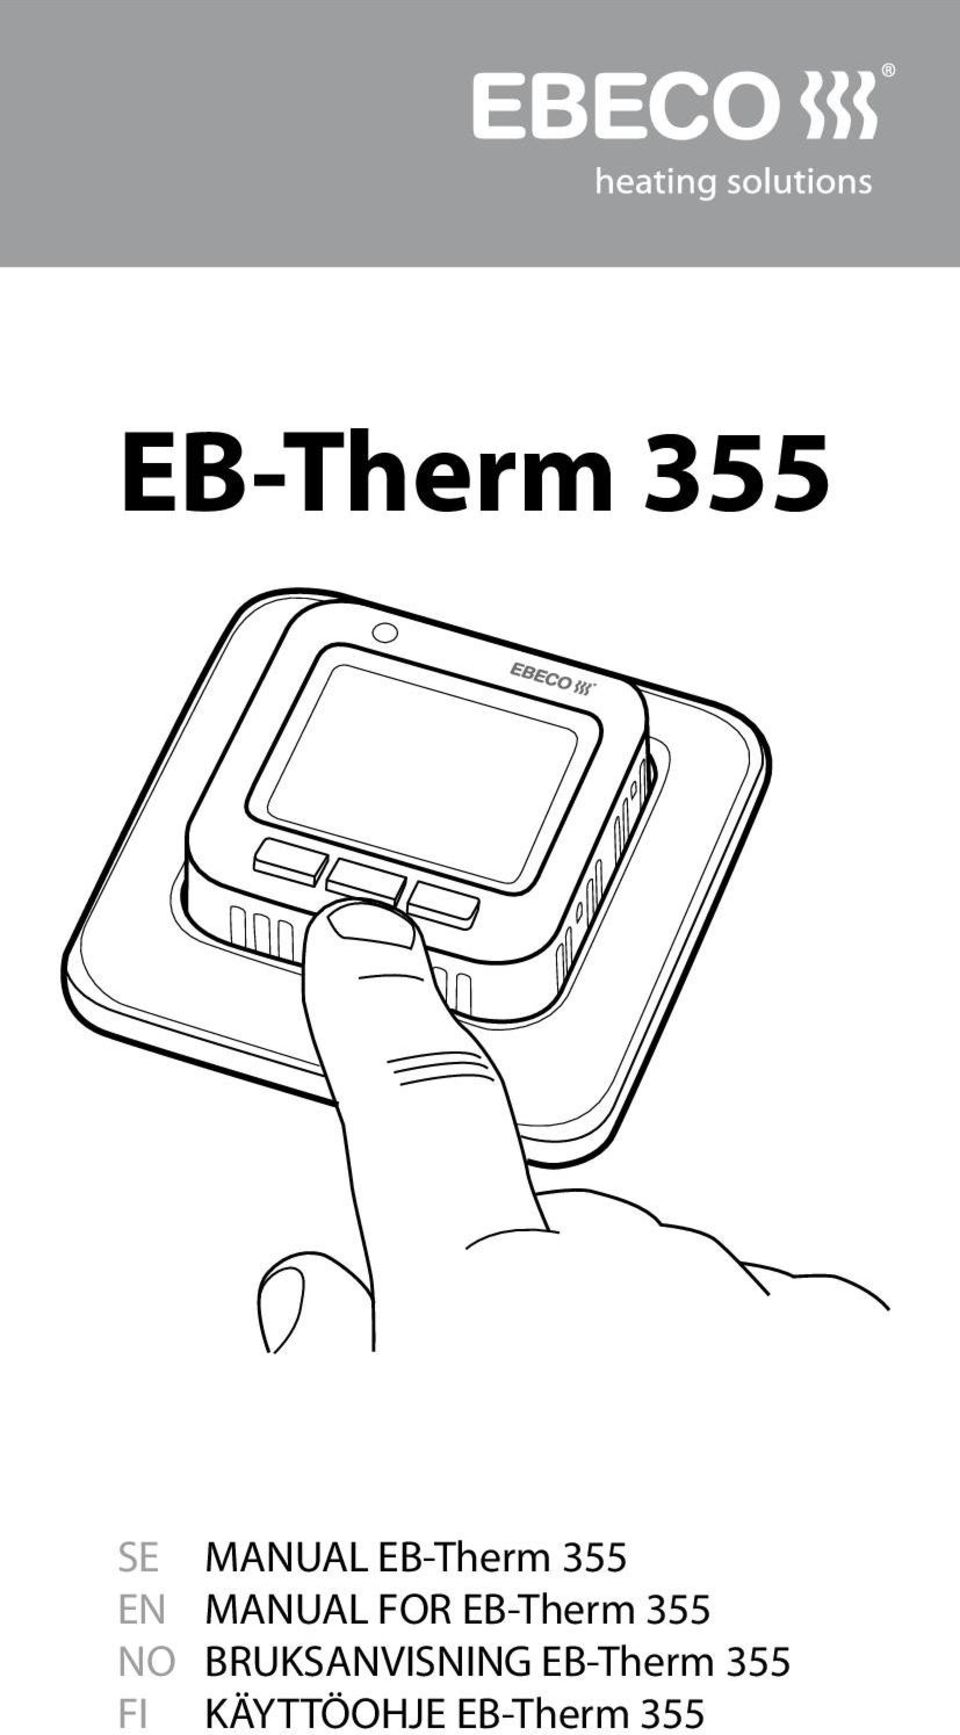 EB-Therm 355 SE EN NO FI. MANUAL EB-Therm 355 MANUAL FOR EB-Therm 355  BRUKSANVISNING EB-Therm 355 KÄYTTÖOHJE EB-Therm PDF Free Download